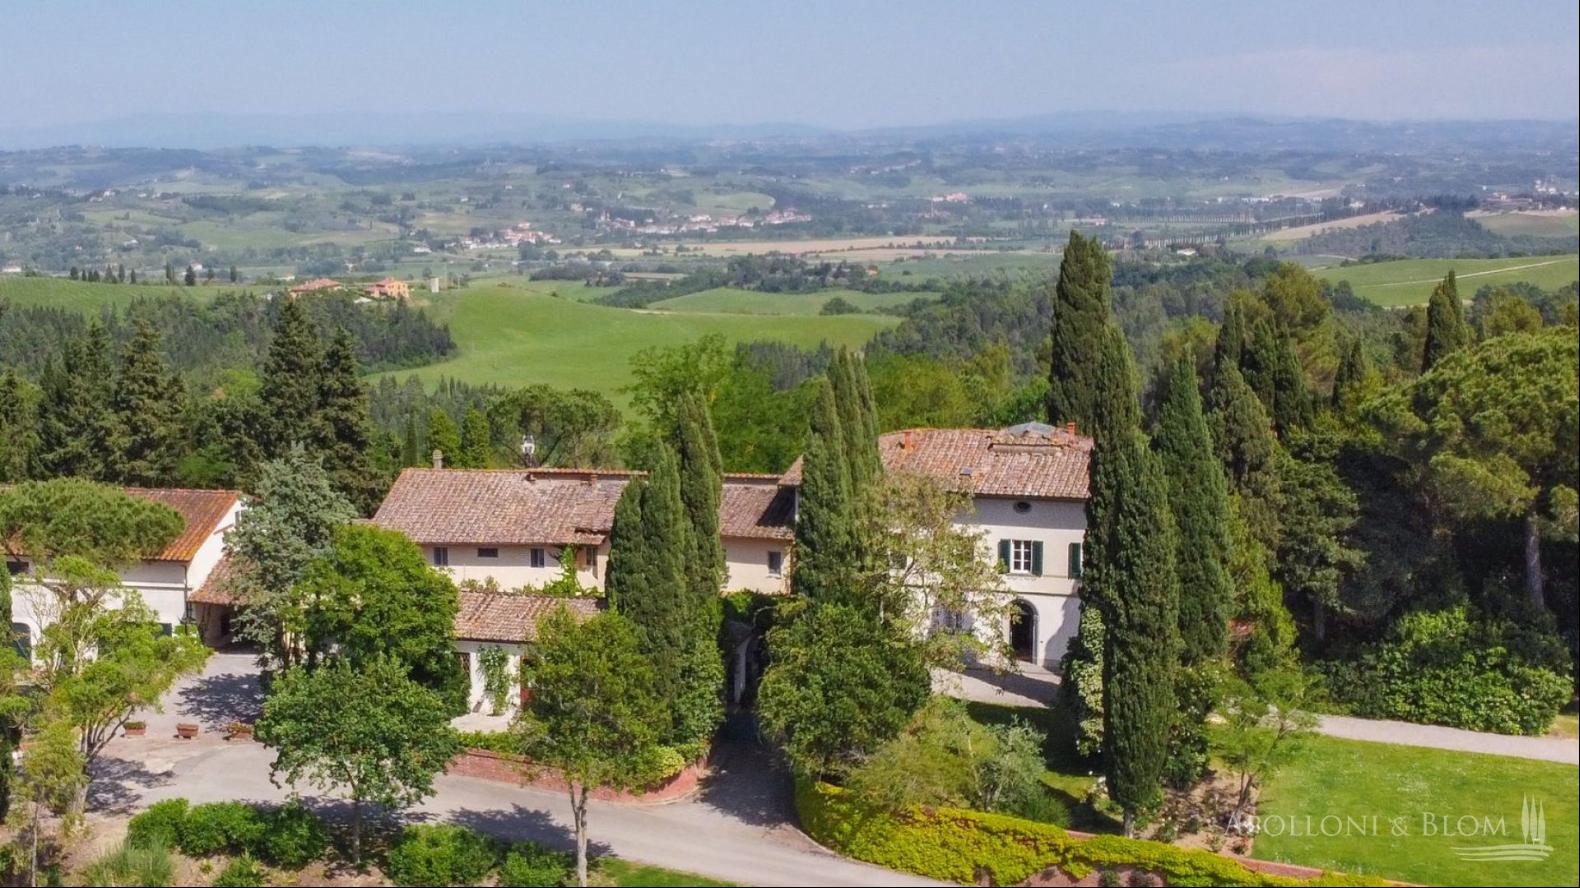 Il Barone Mansion with Chianti DOCG vineyards, Pisa - Tuscany